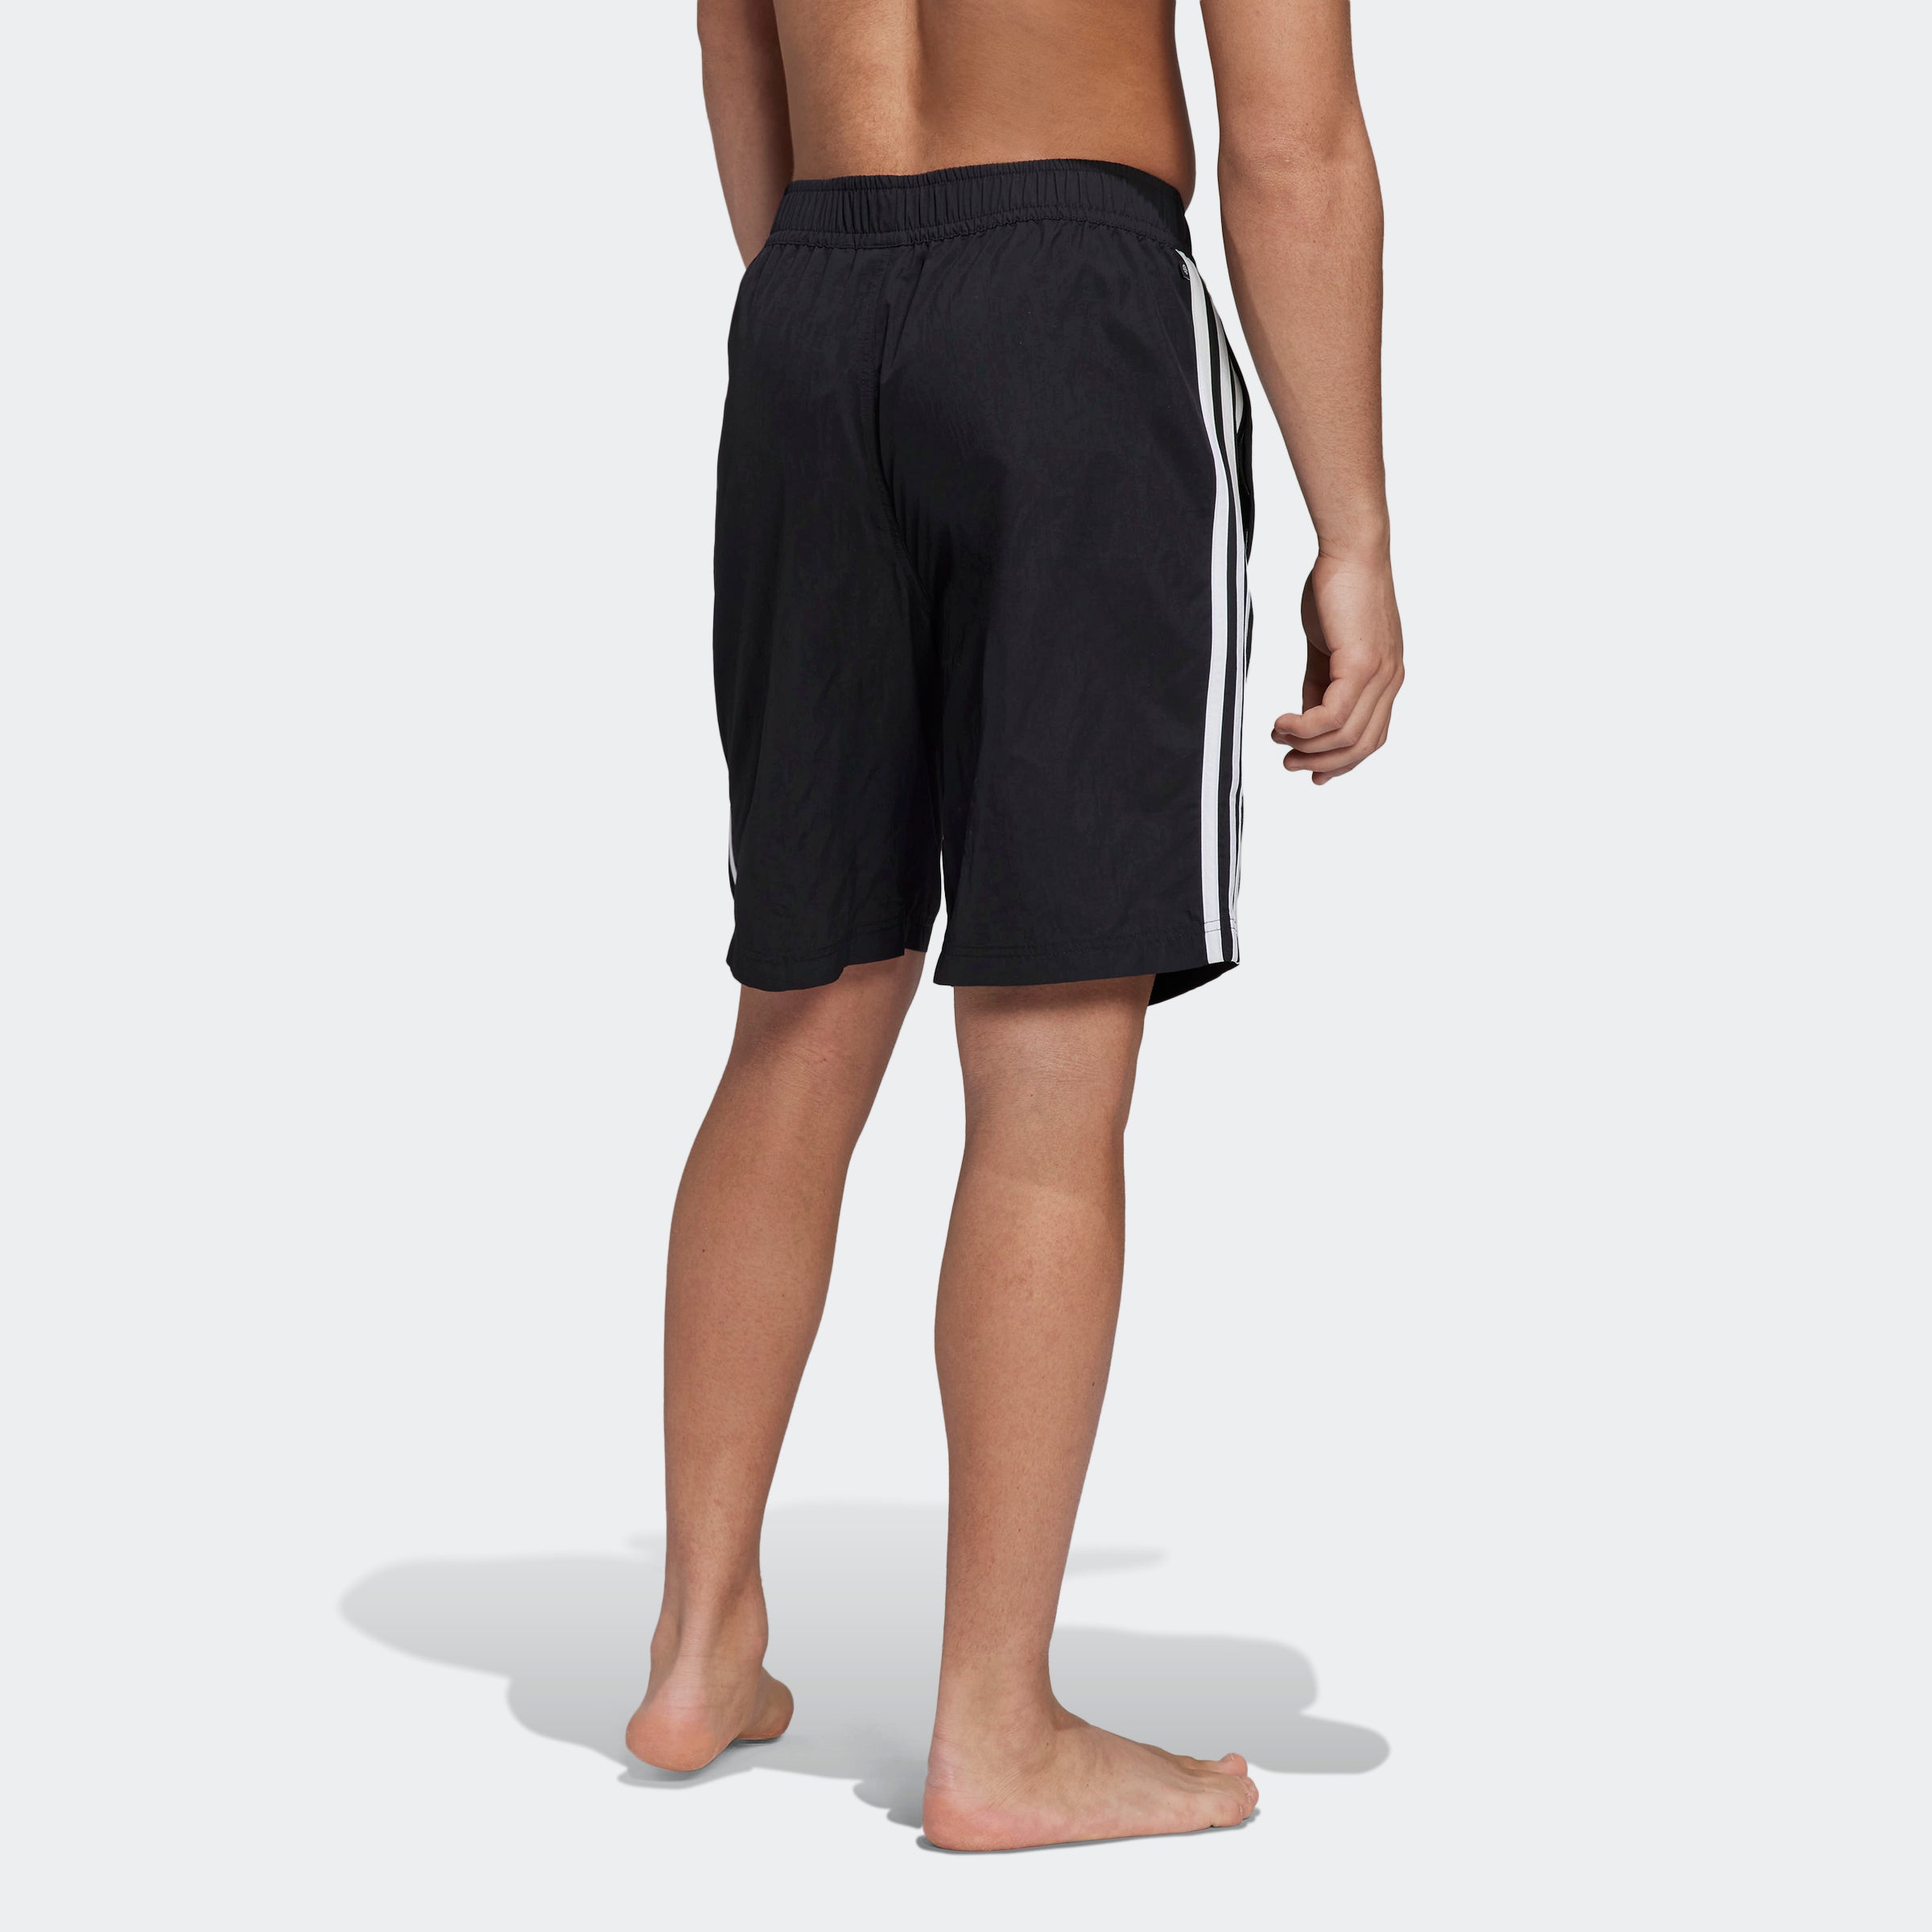 Adidas Adicolor 3-Stripes Black Board Shorts